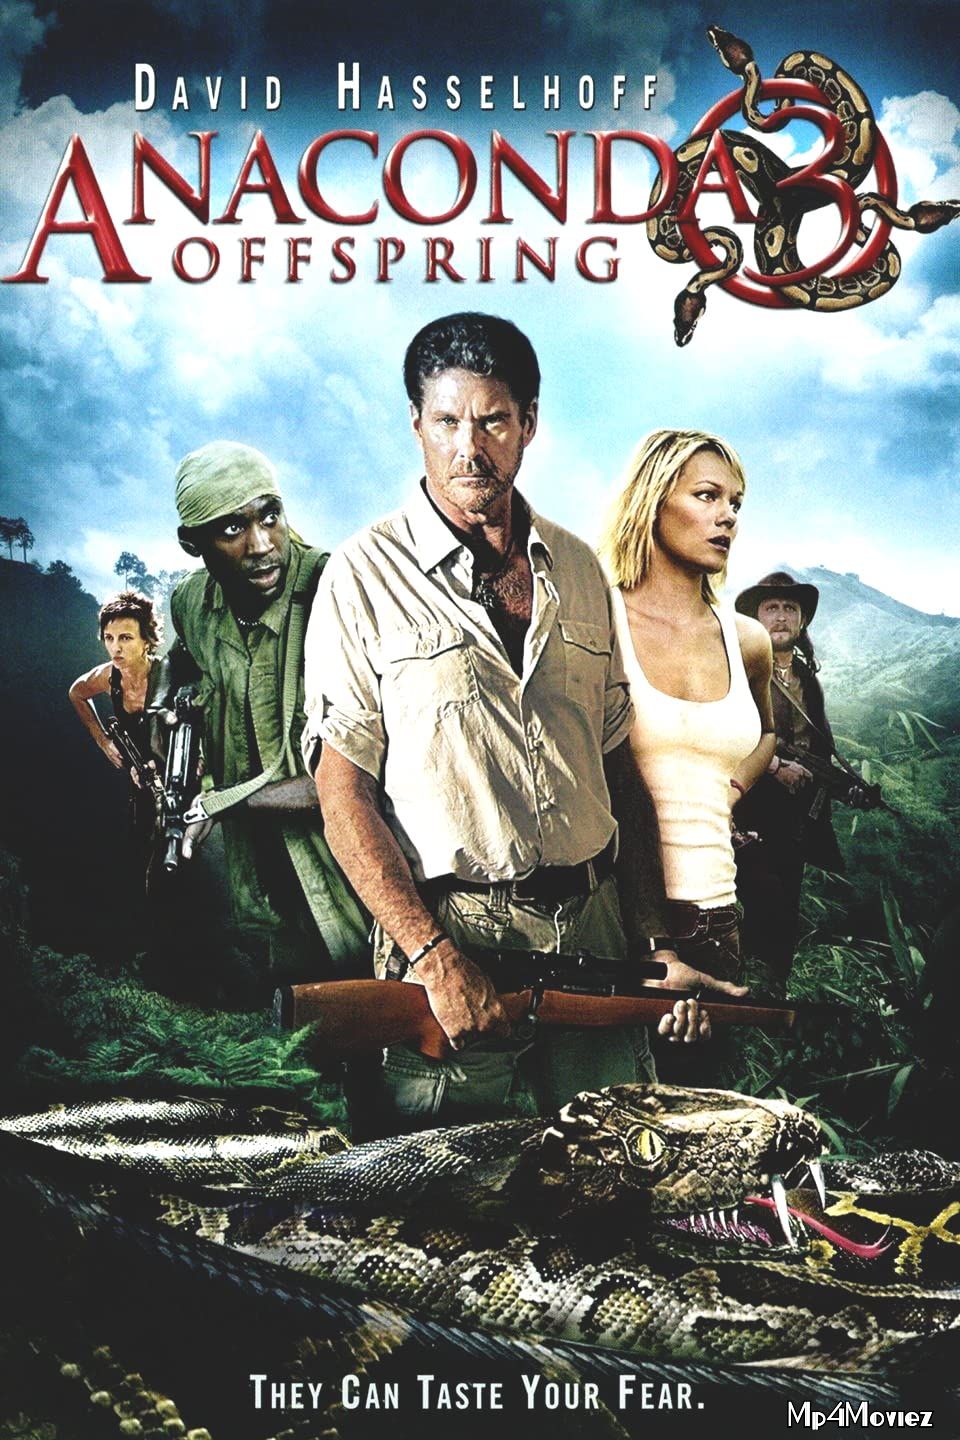 Anaconda 3 Offspring (2008) Hindi Dubbed HDRip download full movie